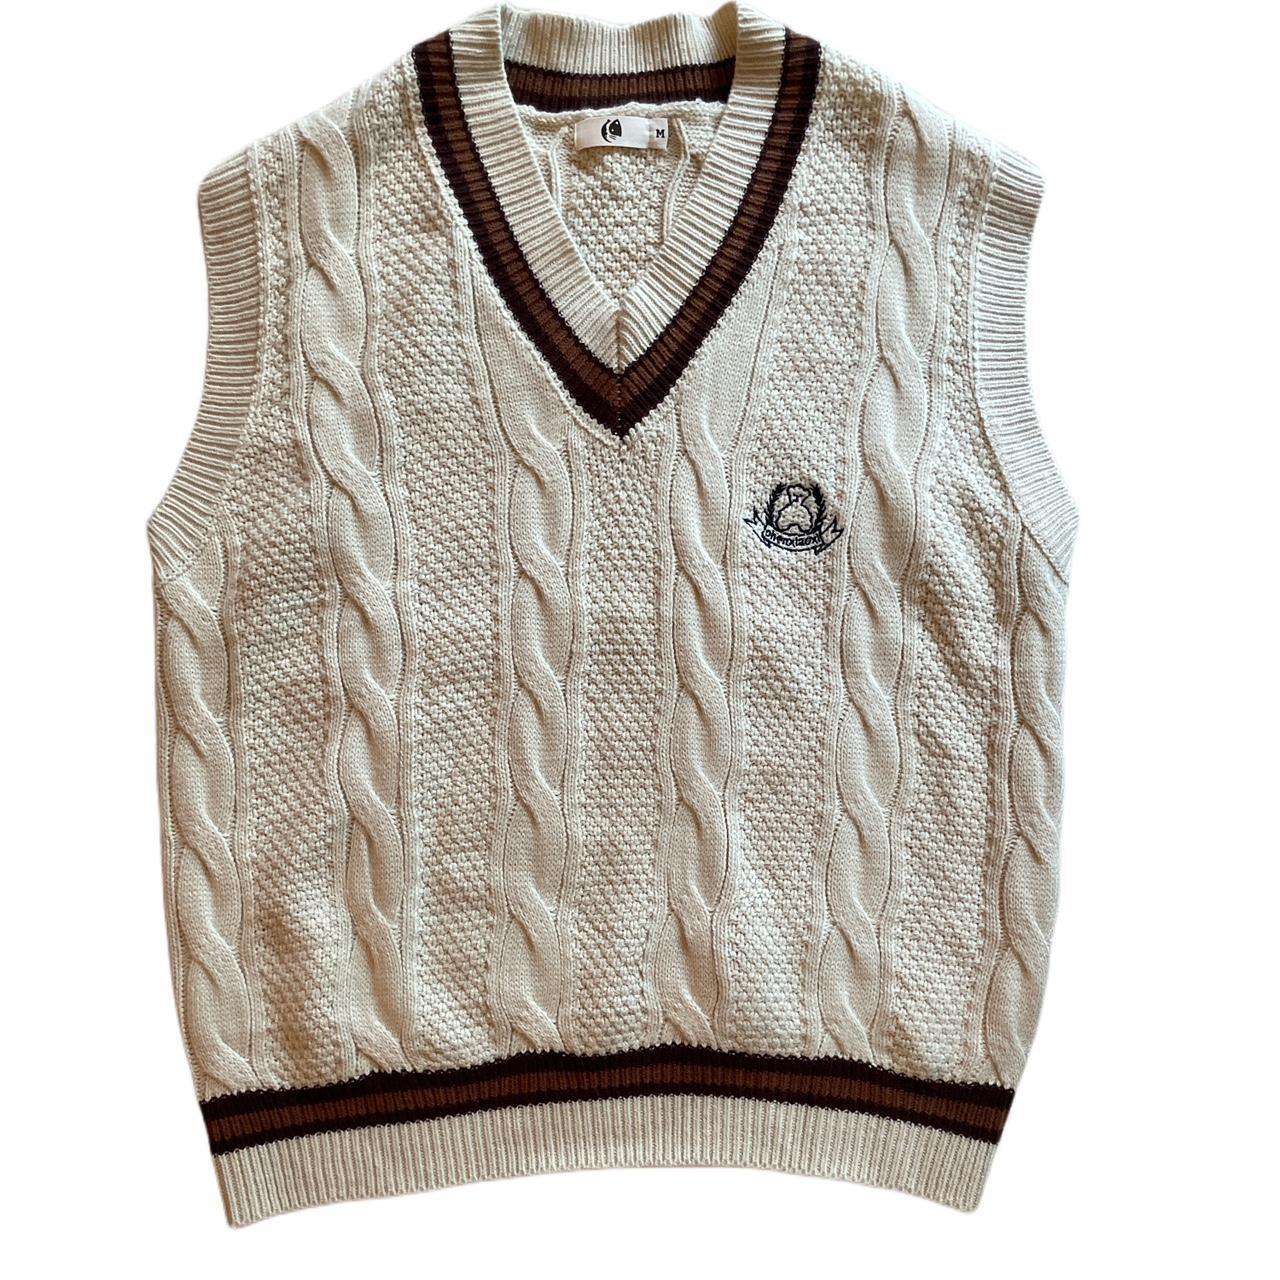 Aelfric Eden Teddy Bear Knit Sweater vest • Medium •... - Depop